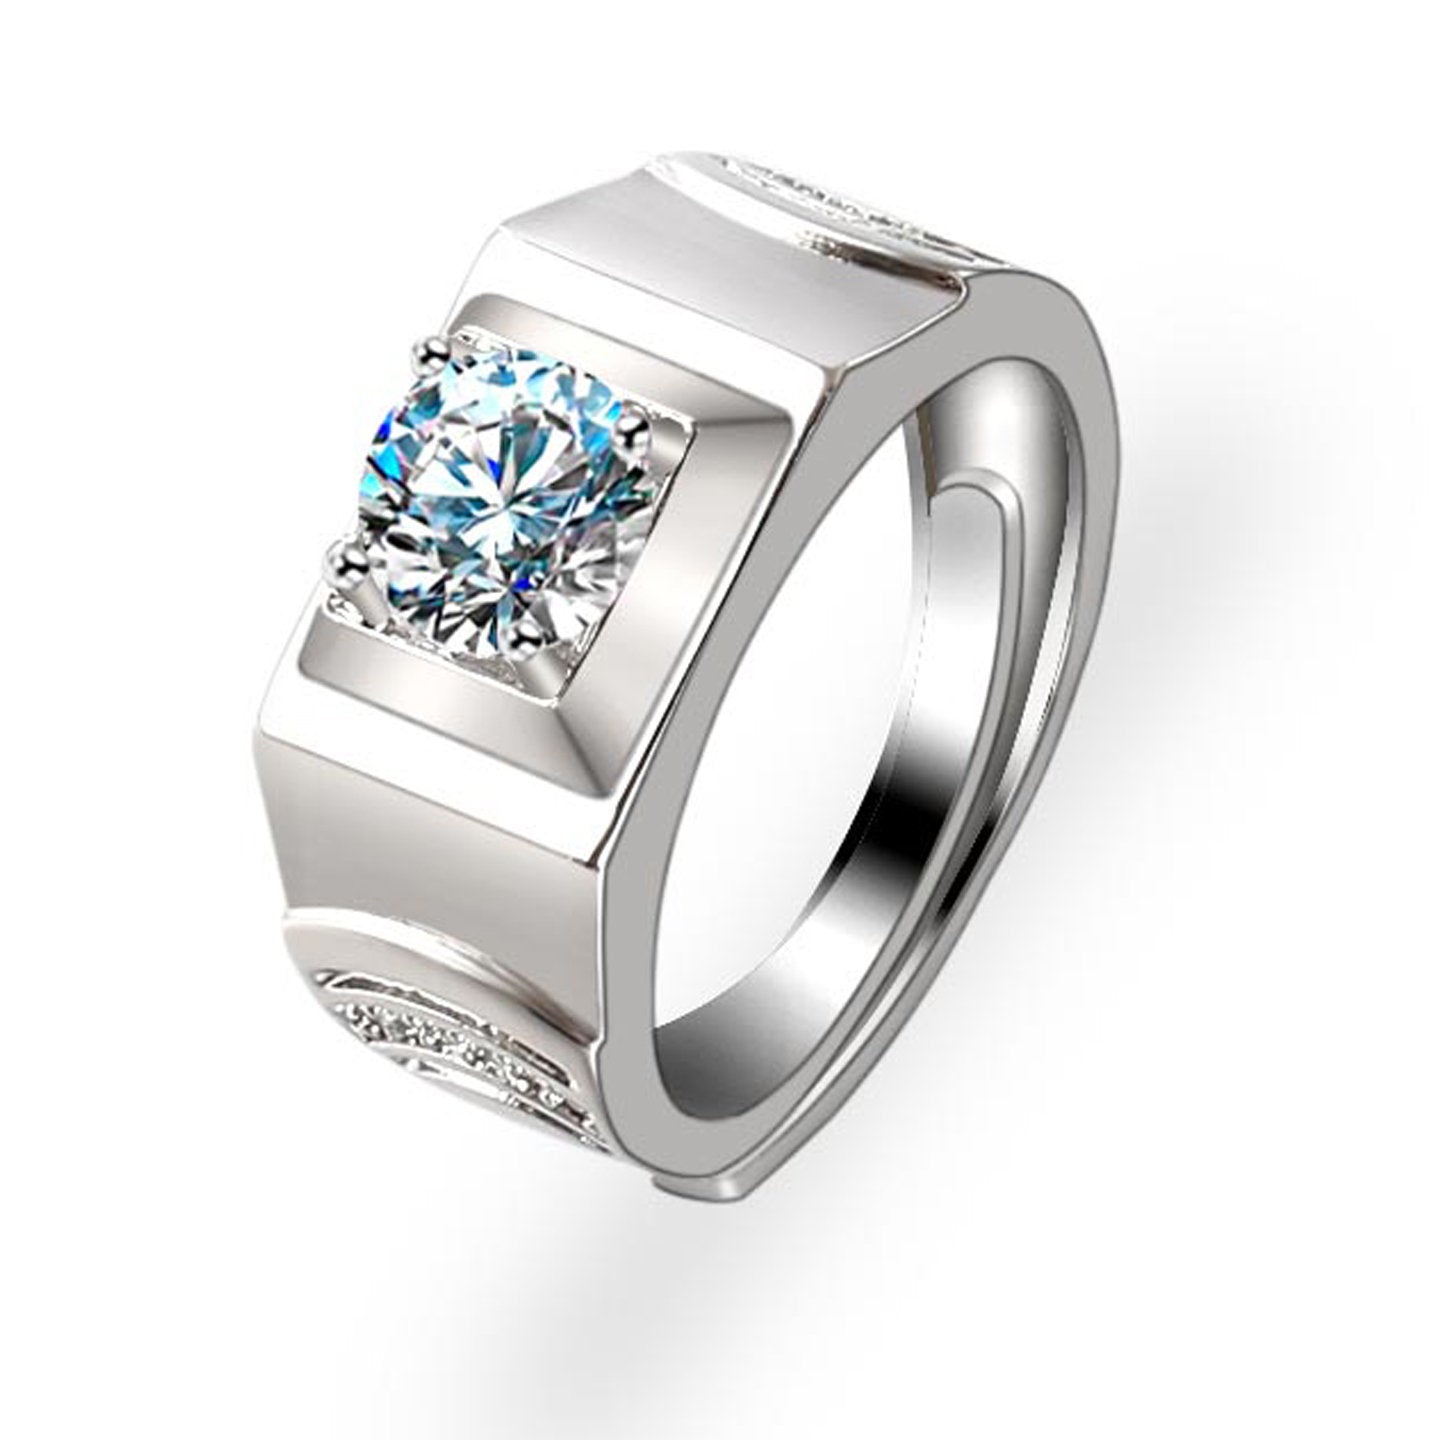 Copper studded diamond destined ring MYA001RS064